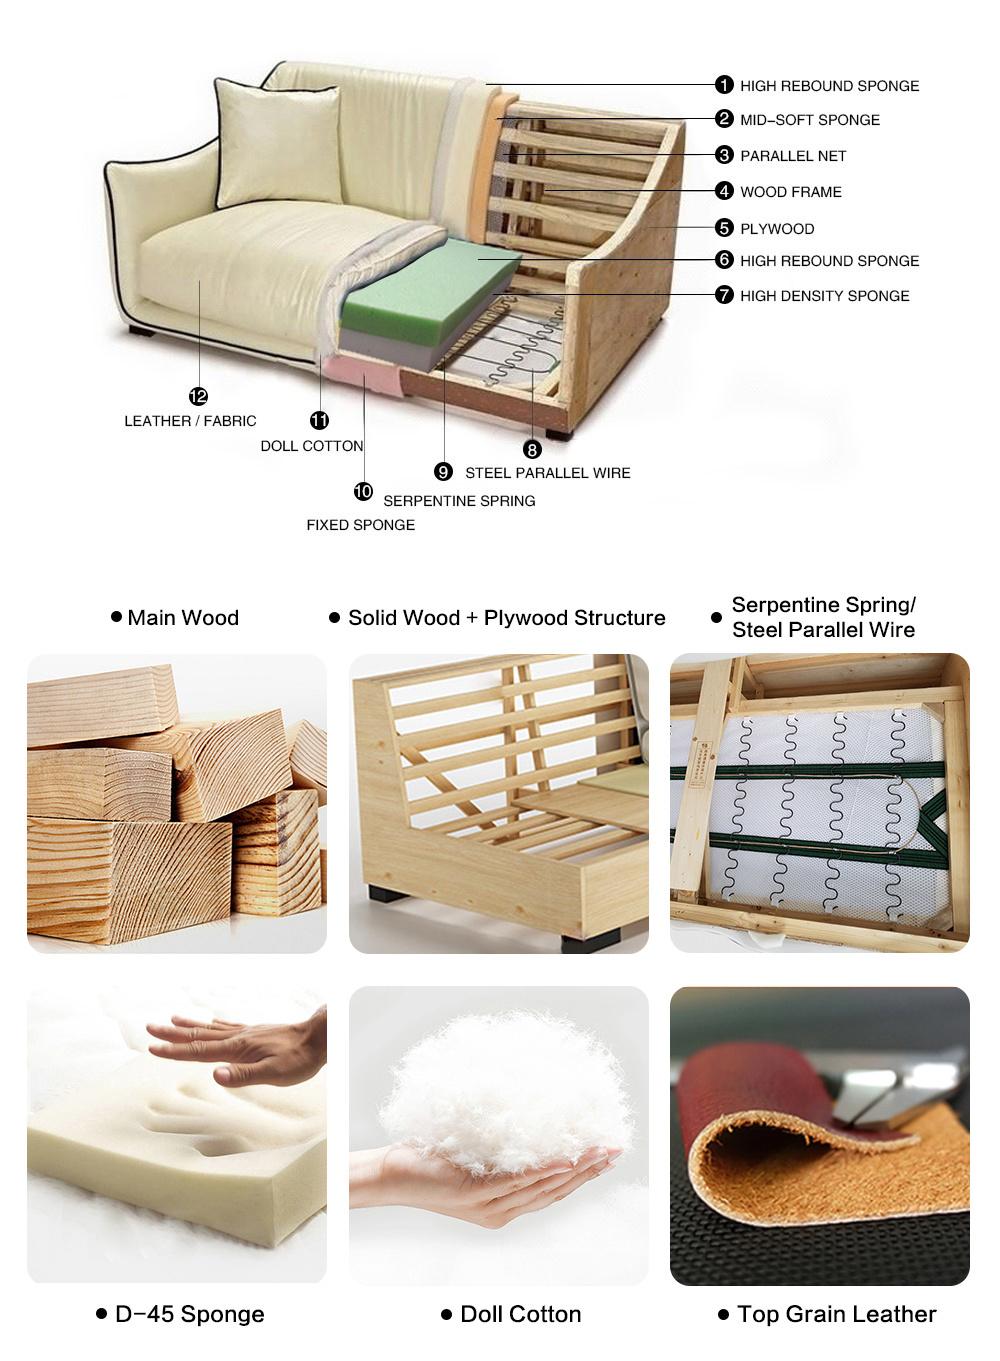 China Living Room Home Sectinal Top Grain Genuine Leather Leisure 1+2+3 Sofa Chair Furniture